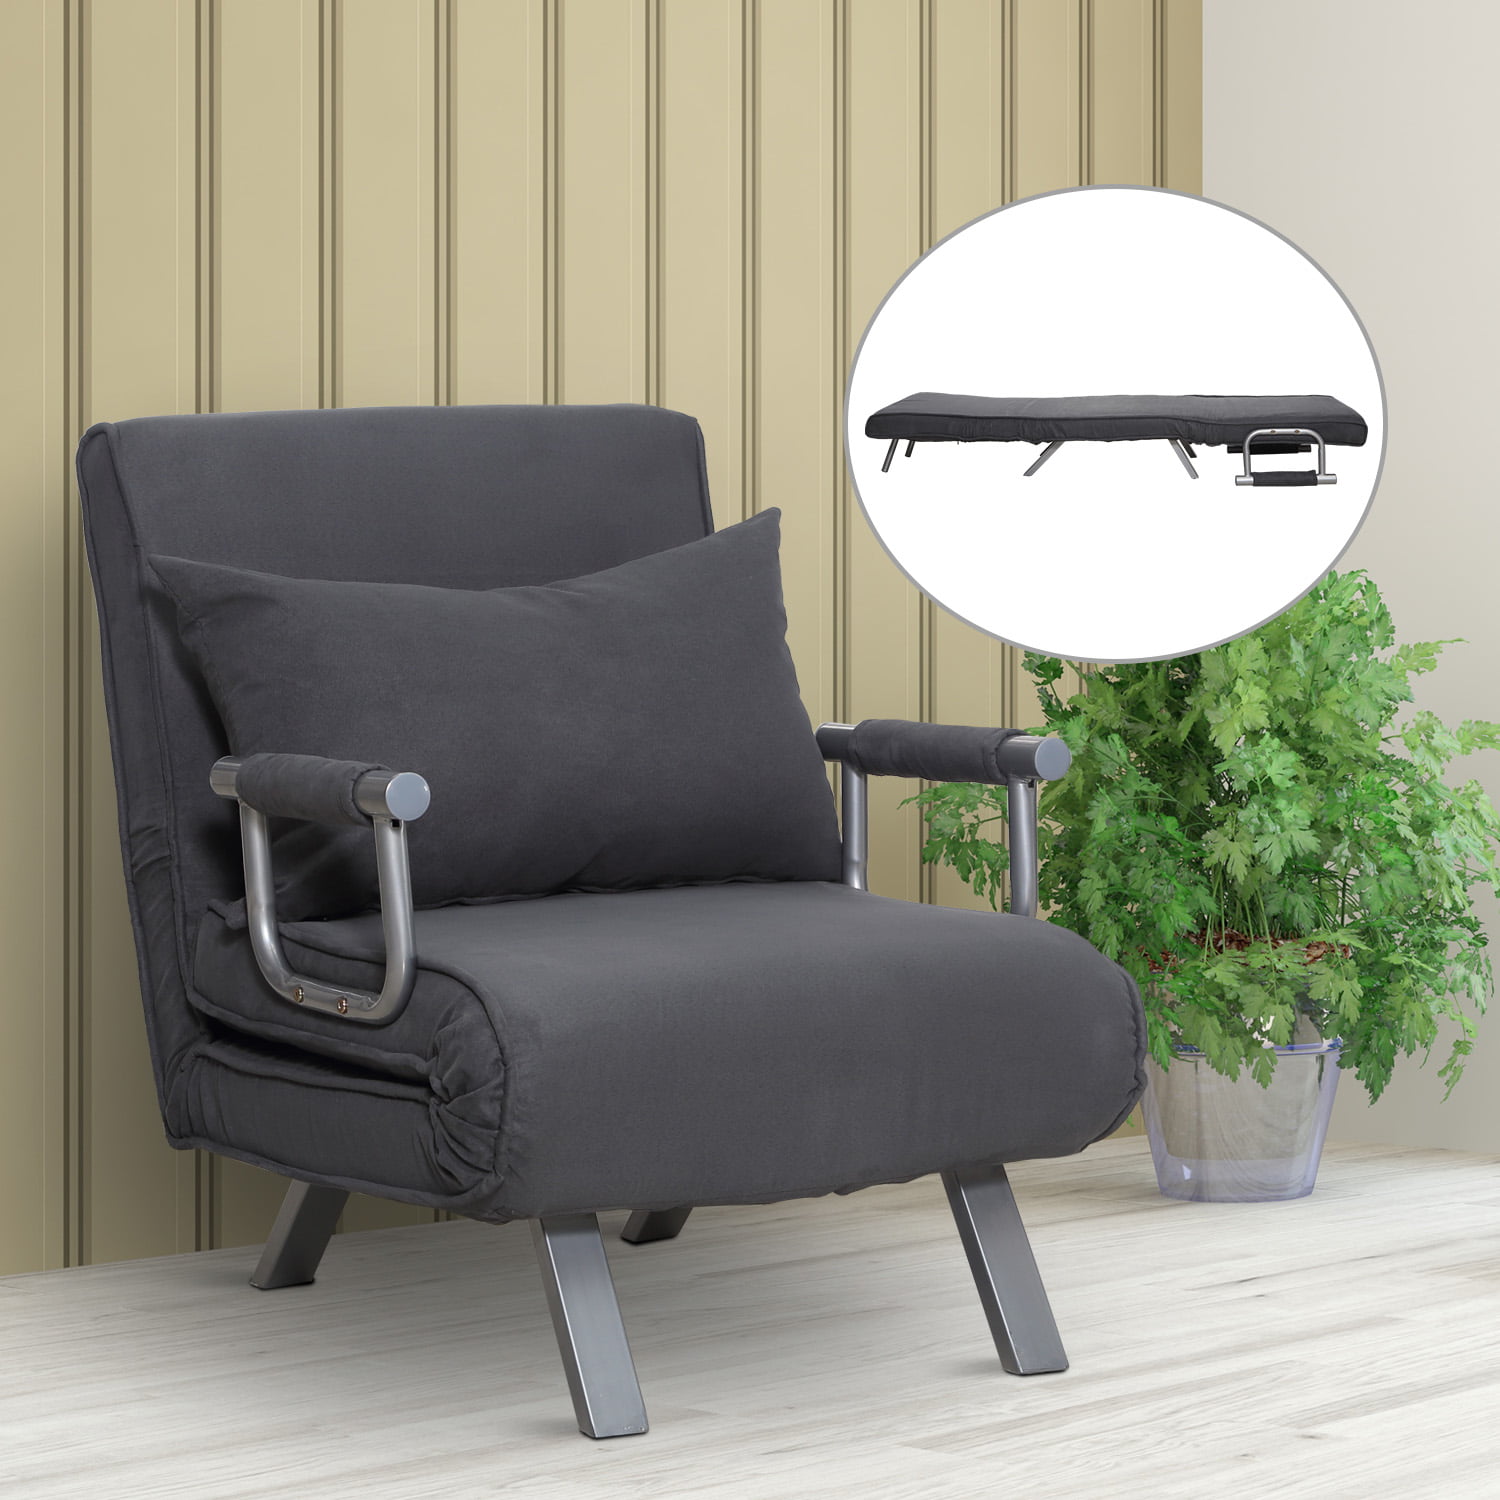 Adjustable Folding Convertible Single, Homhum Convertible Sofa Bed Sleeper Chair